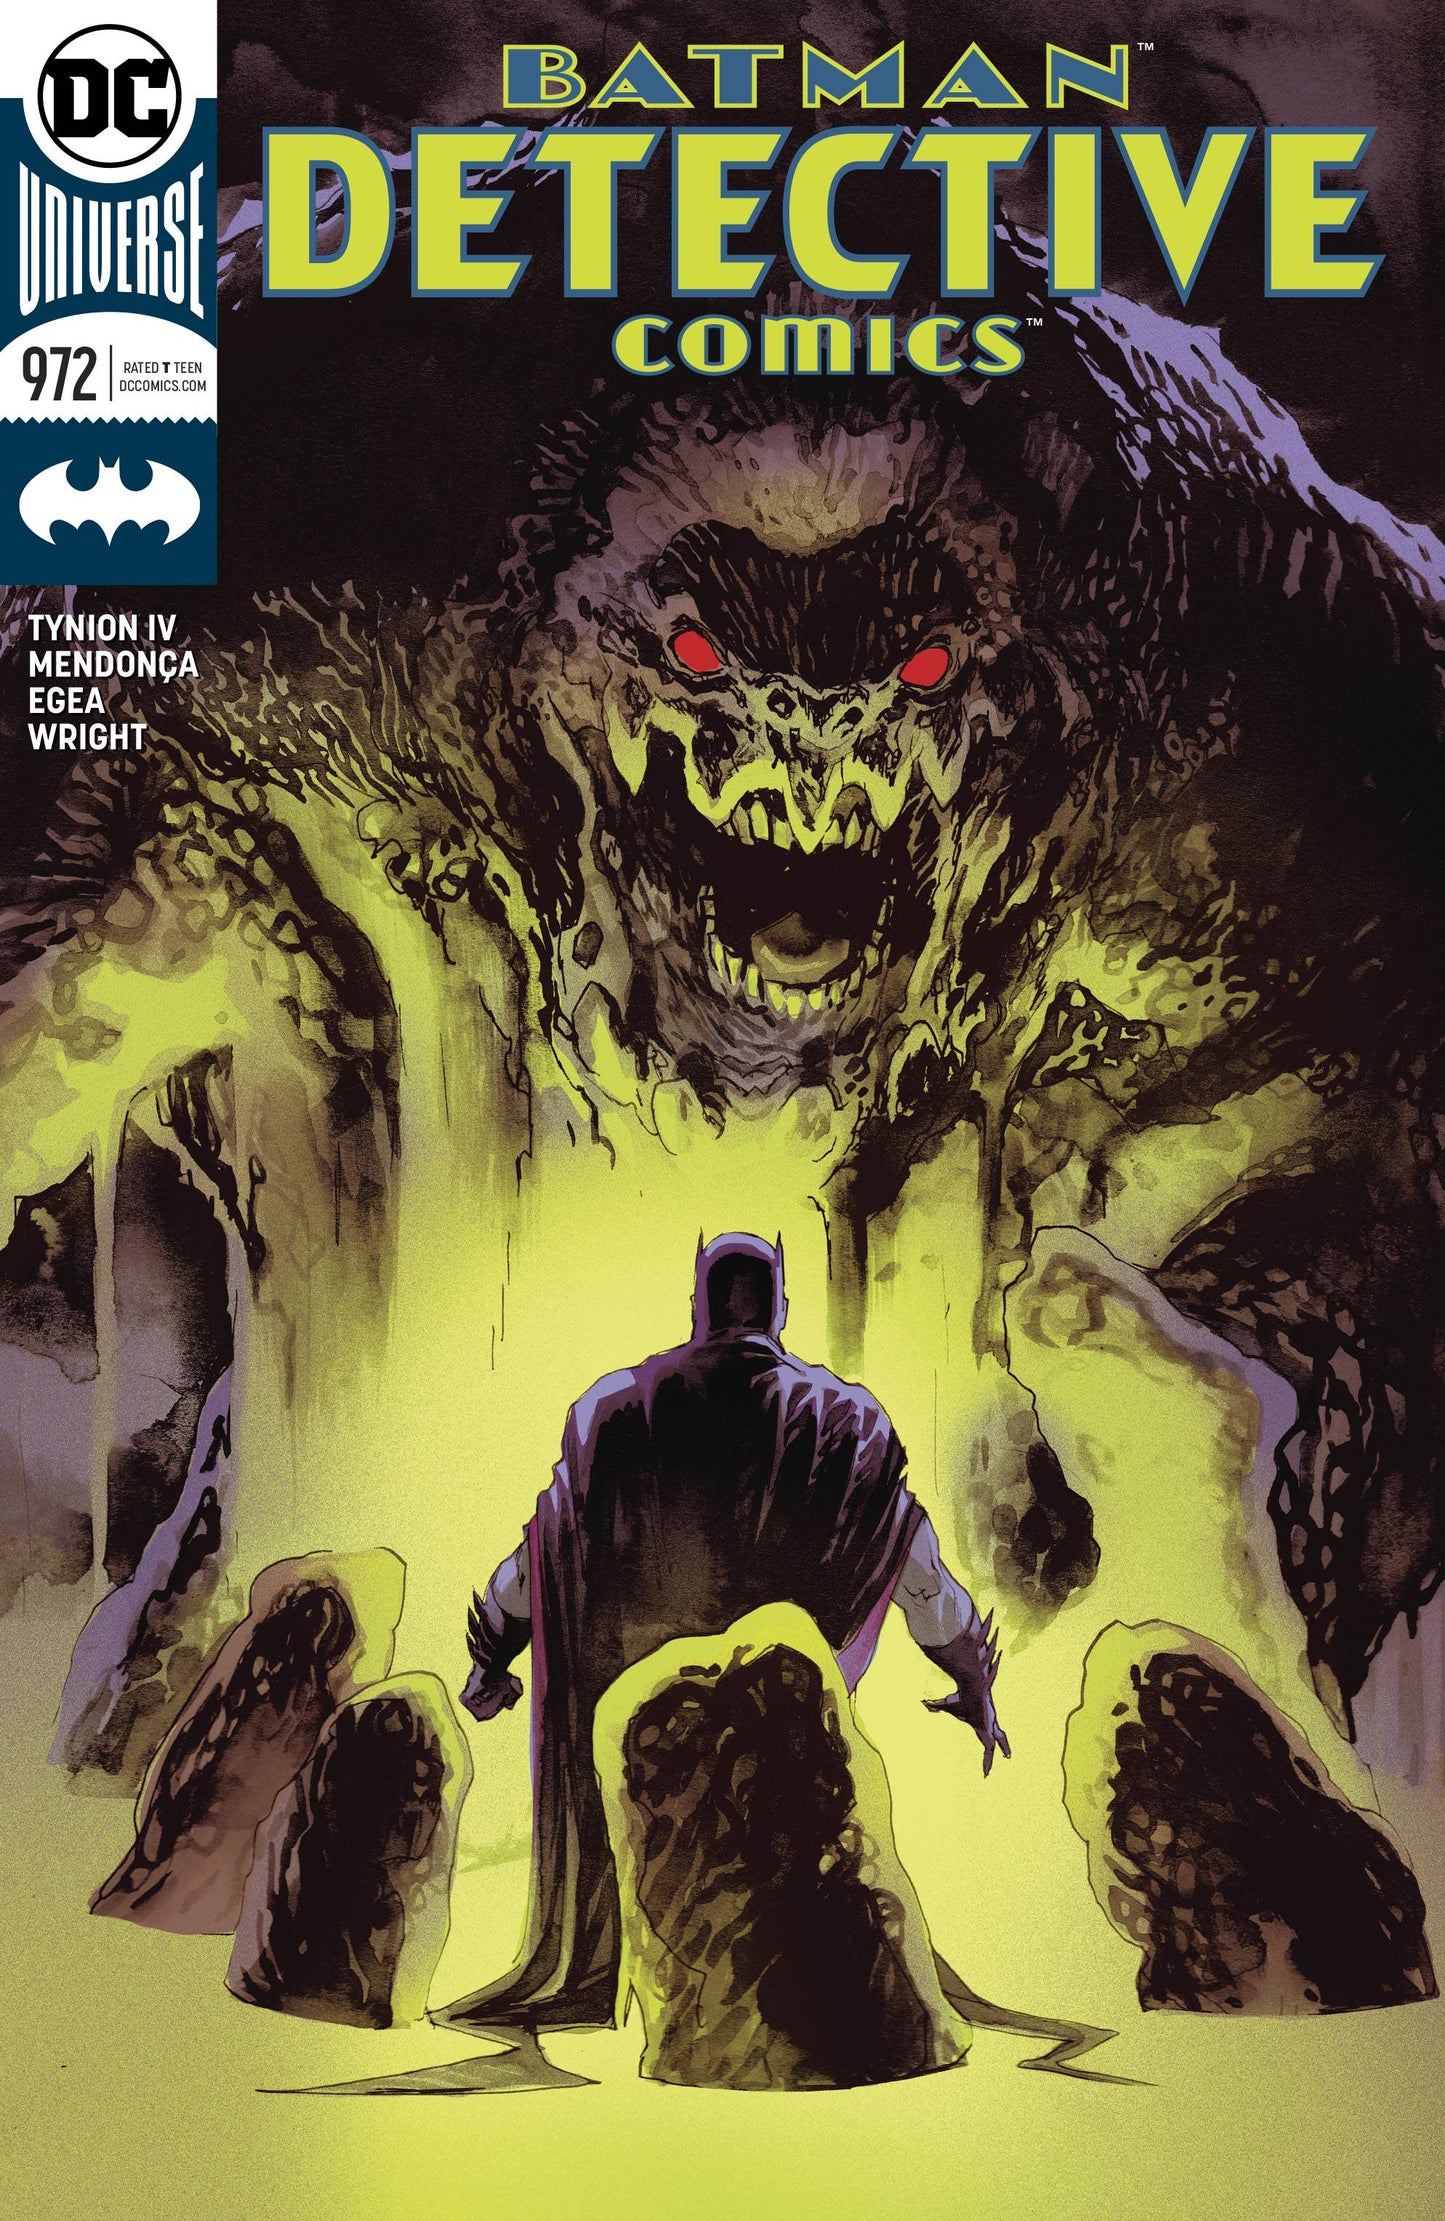 Detective Comics #972 Variant Edition (Albuquerque) [2018]